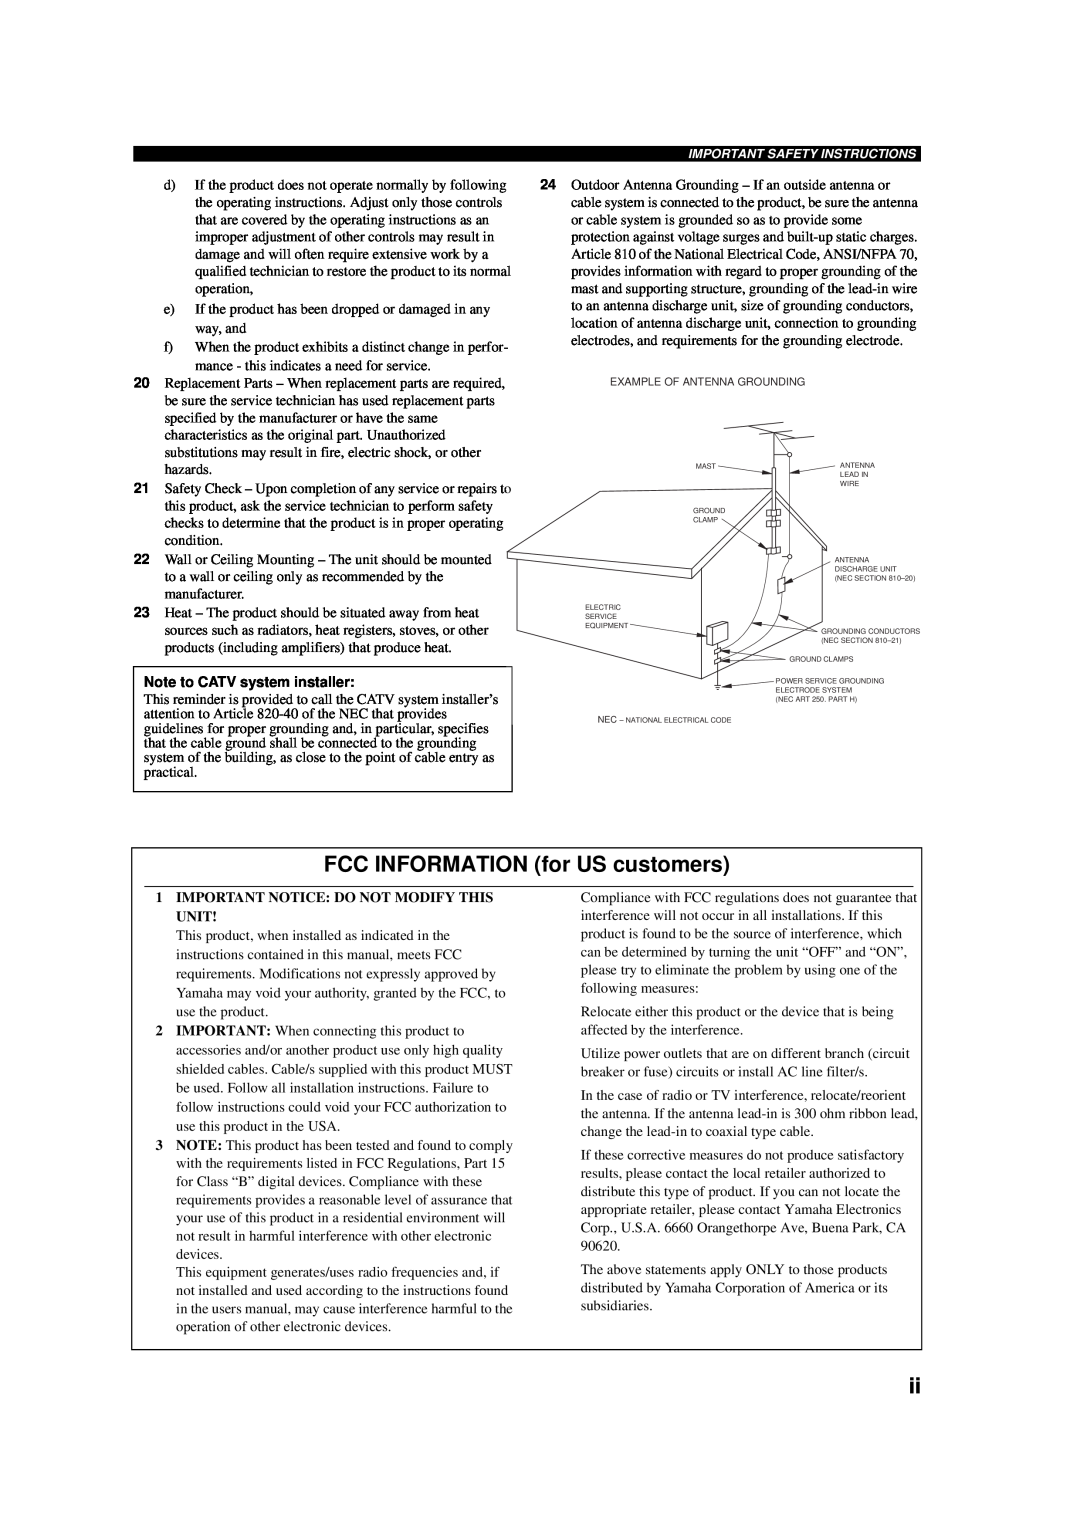 Yamaha AV Receiver owner manual FCC INFORMATION for US customers, Note to CATV system installer 